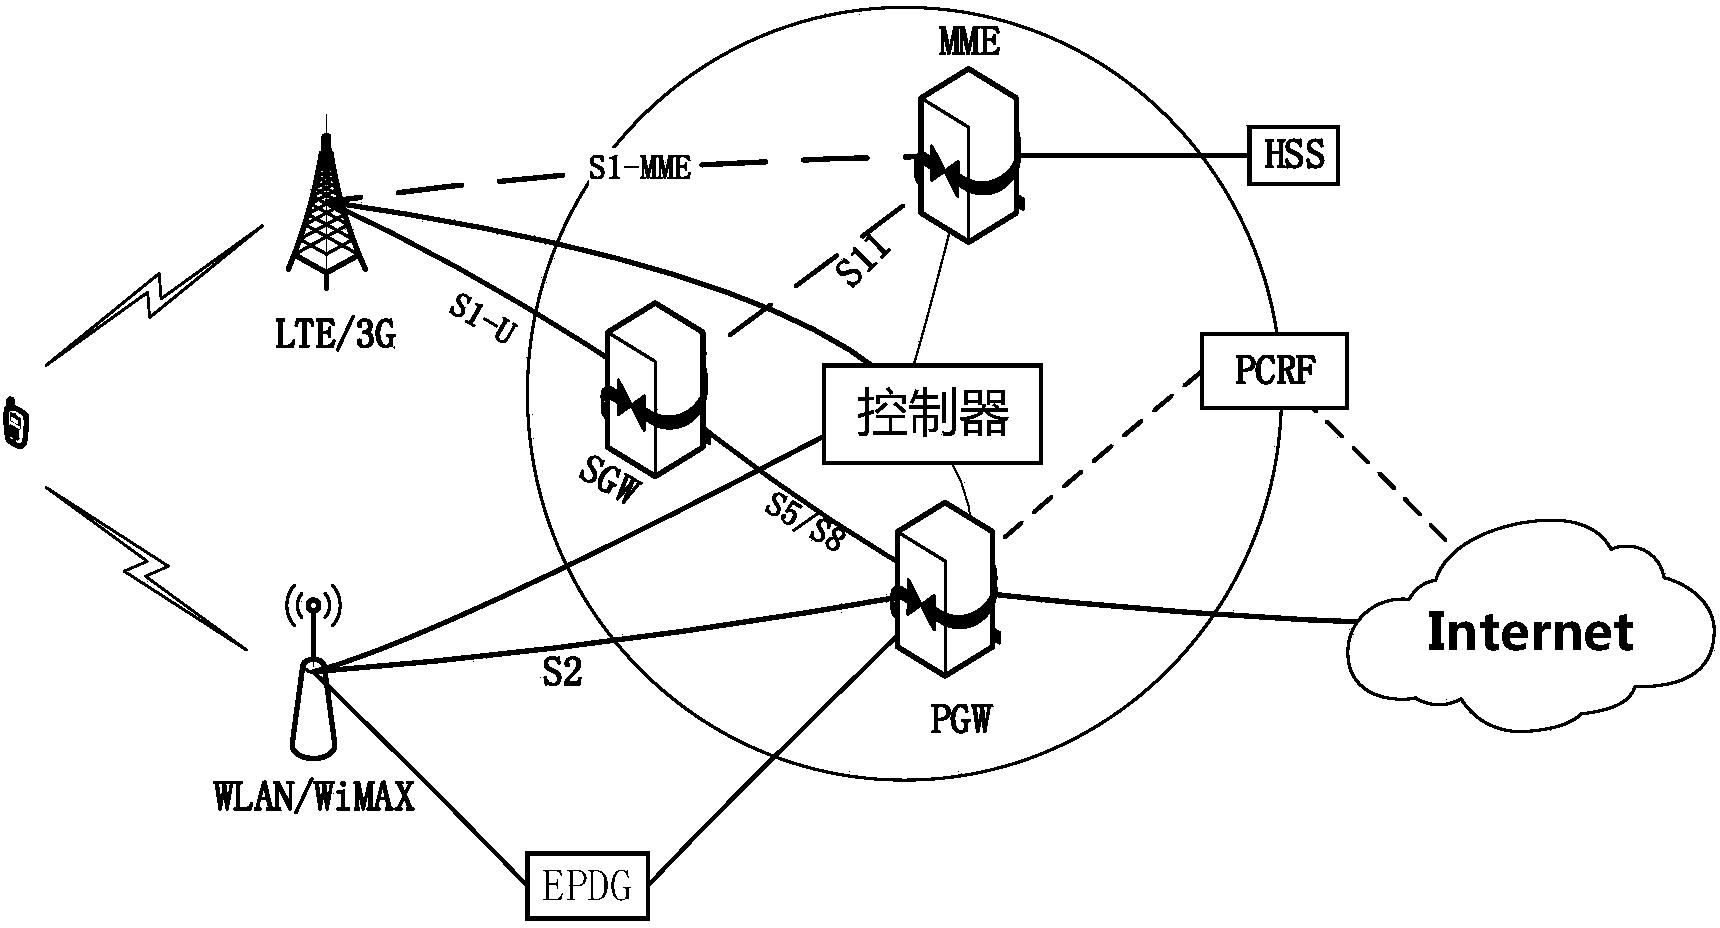 SDN (Software Defined Network)-based heterogeneous network convergence framework